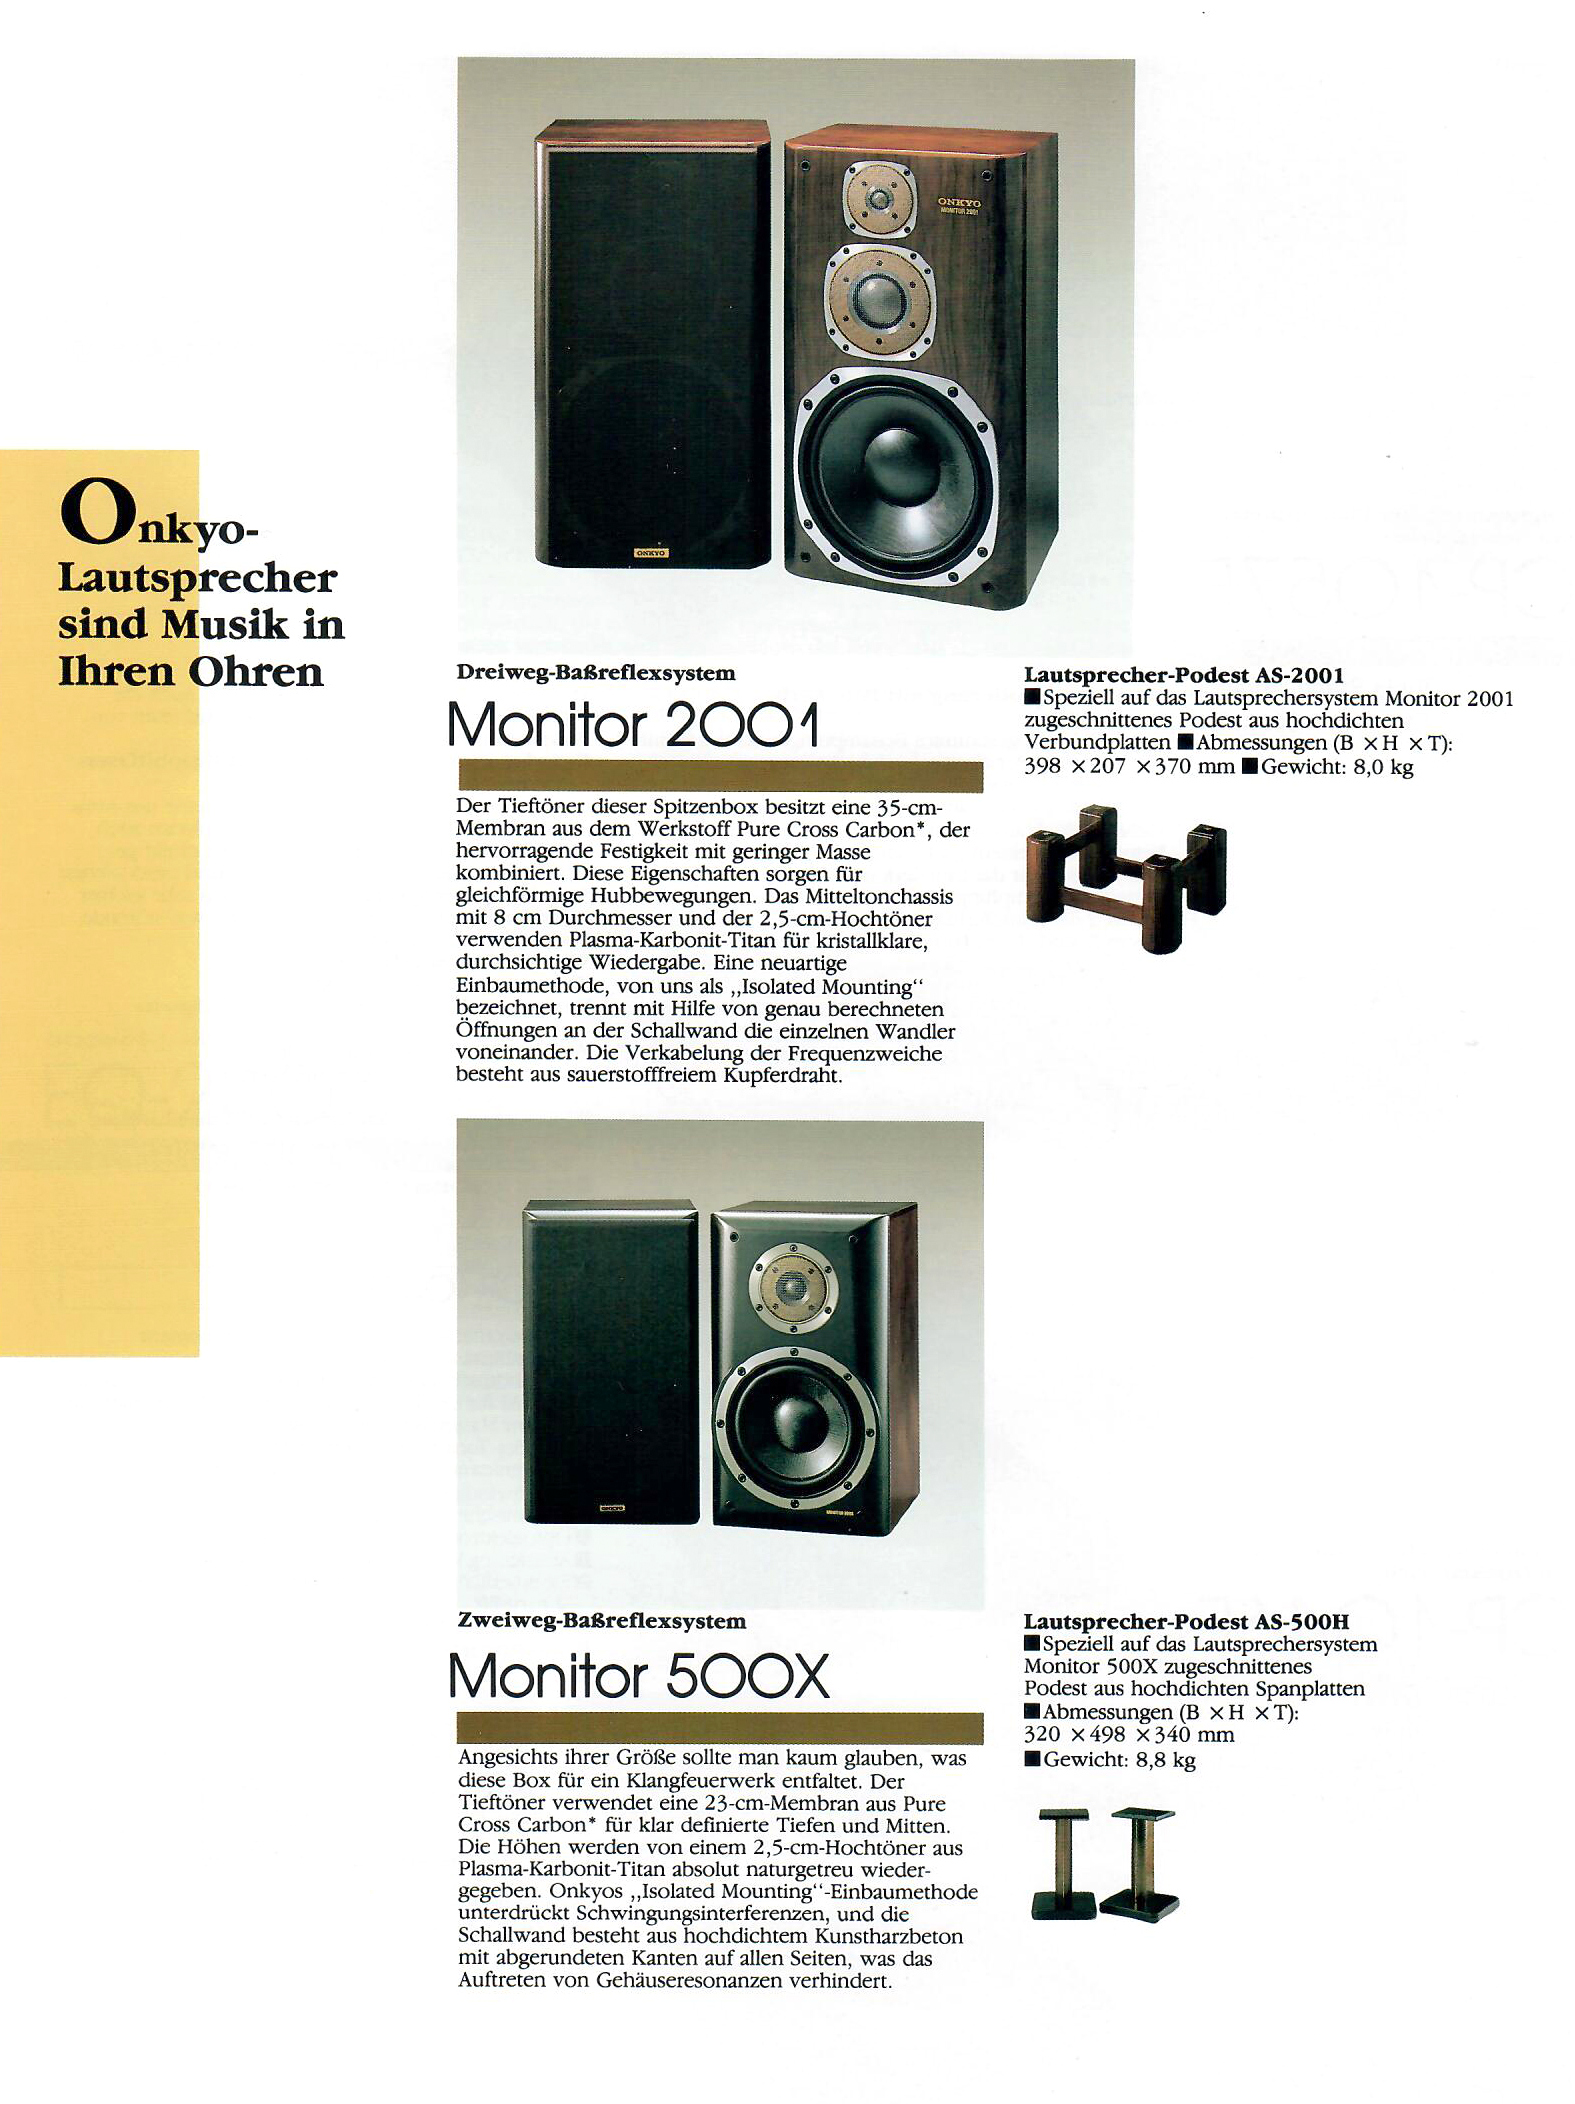 Onkyo Monitor 500 X-2001-Prospekt-1988.jpg